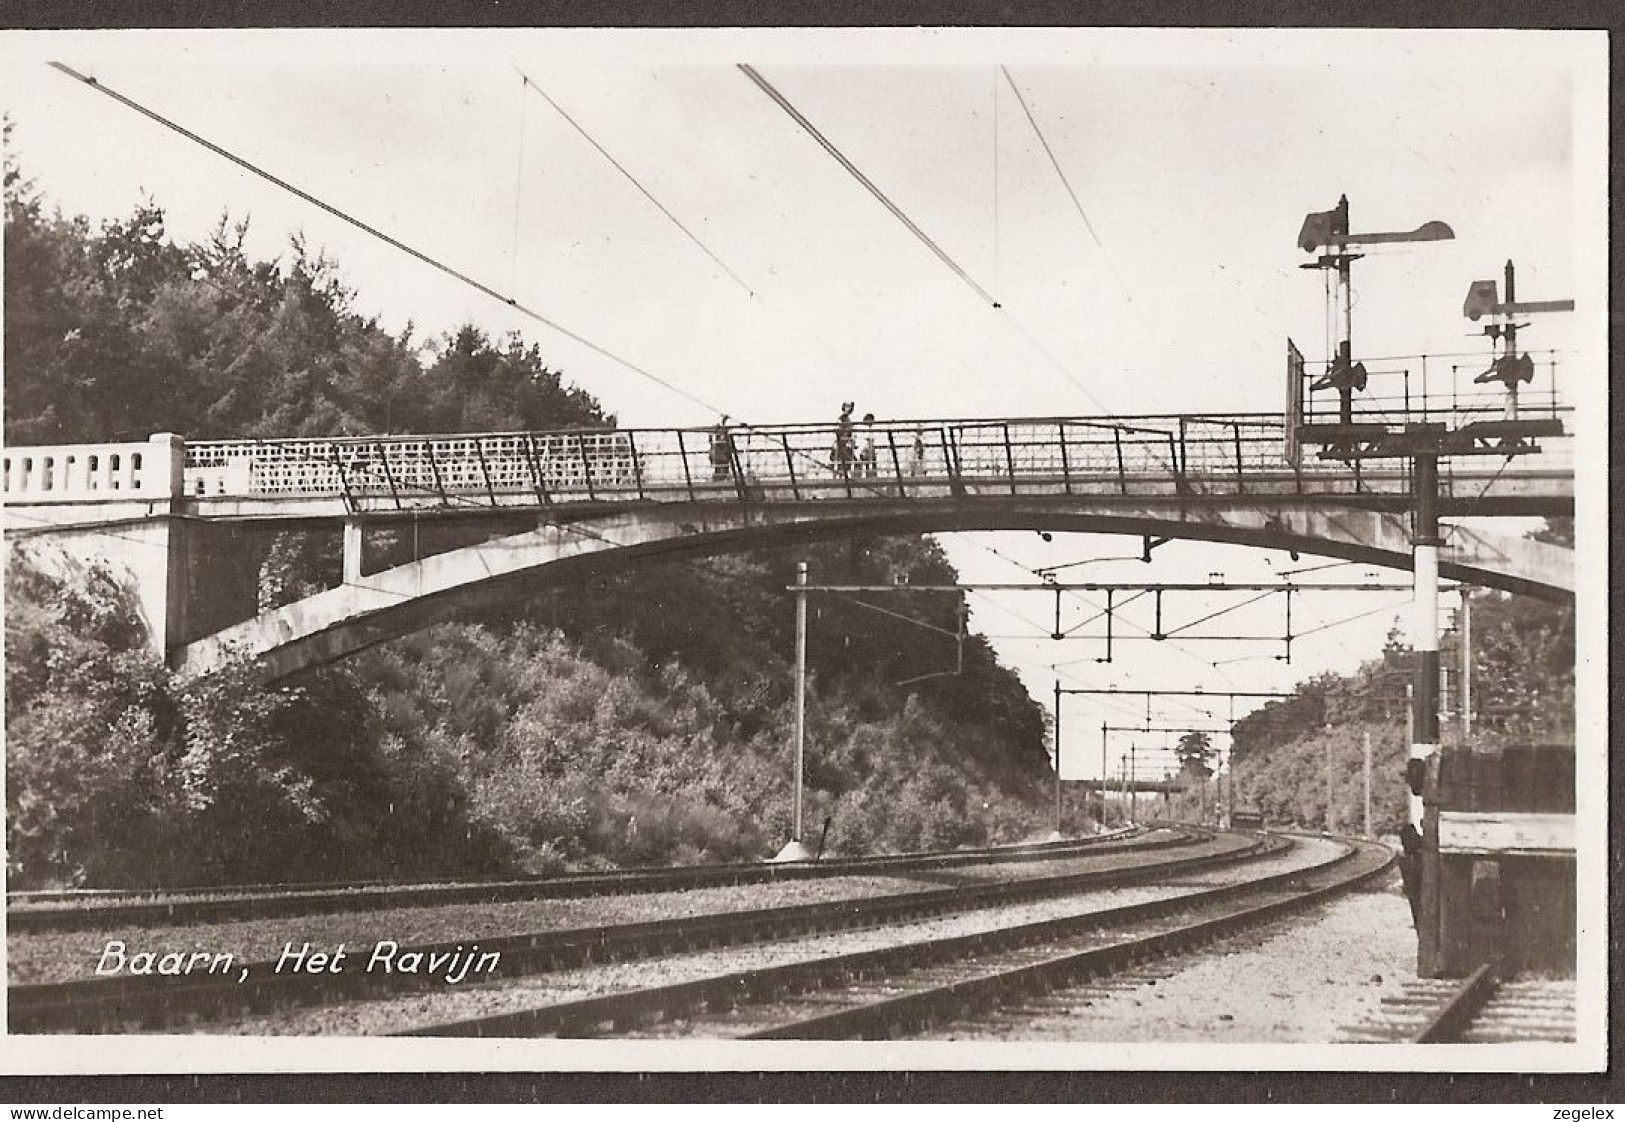 Baarn - Spoor In Het Ravijn, Spoorbrug Met Voetgangers. Eisenbahn, Chemin De Fer, Railroad. - Baarn